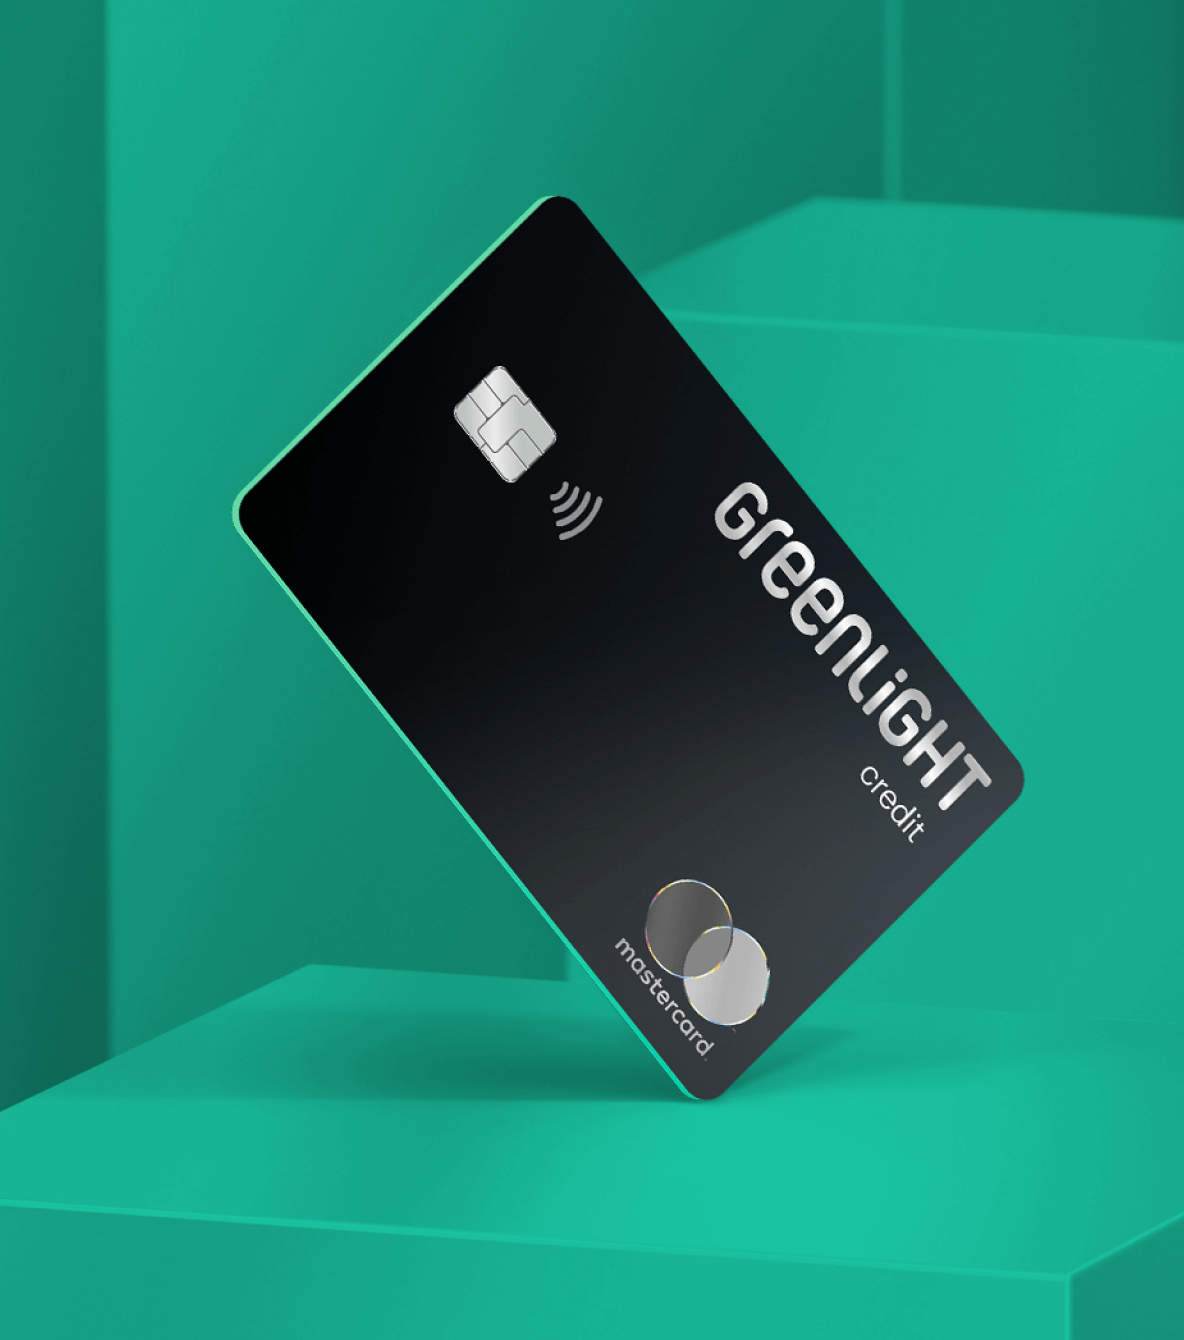 Black Greenlight family cash back credit card against green design